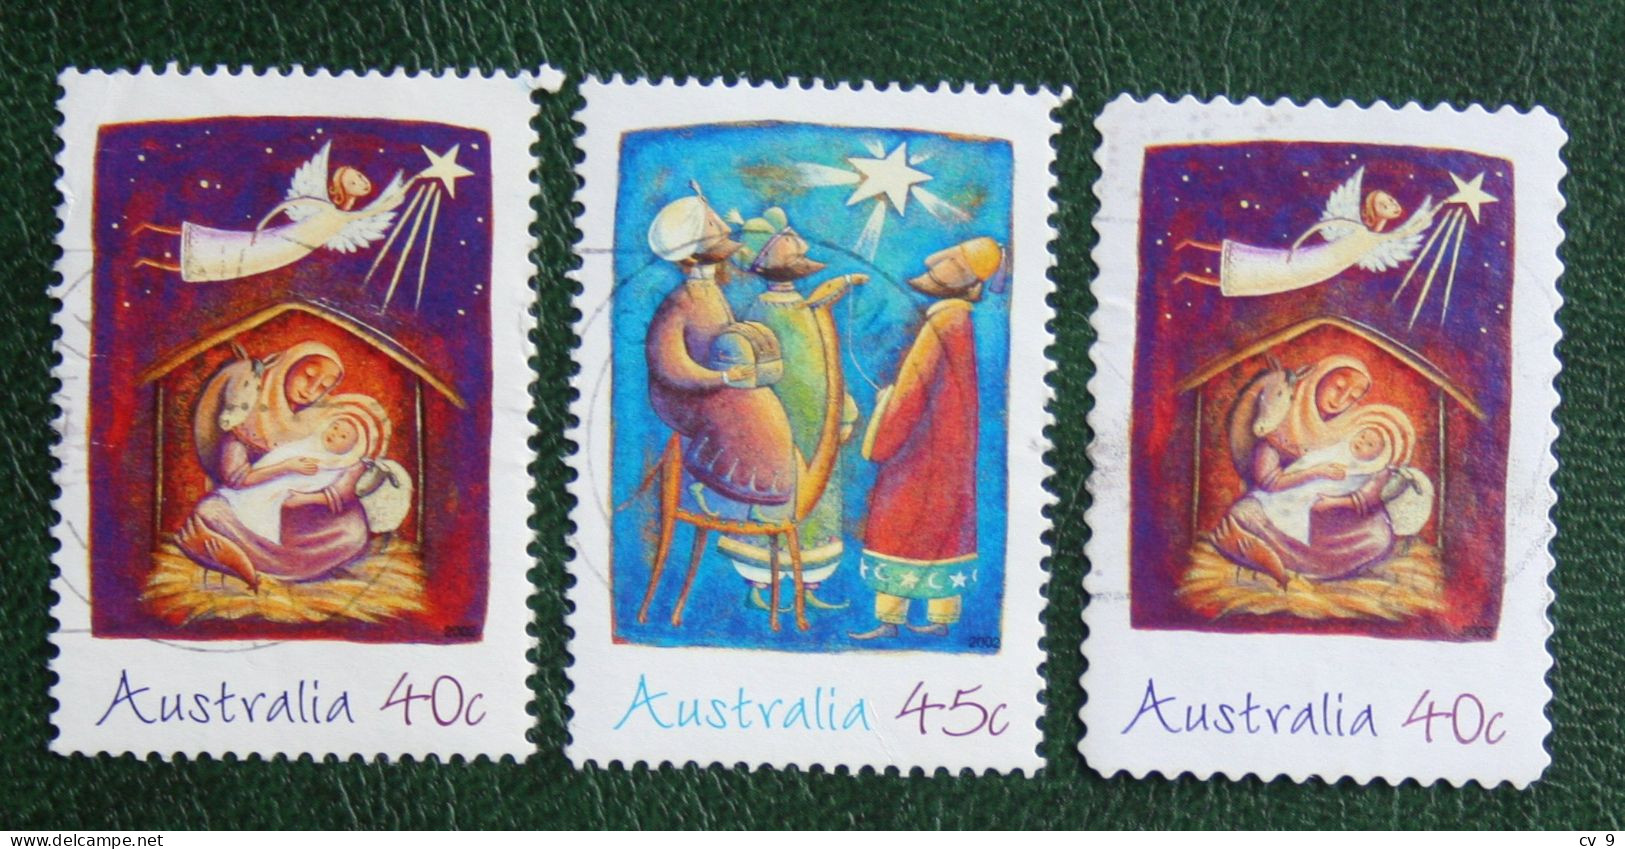 Natale Weihnachten Xmas Noel Kerst 2002 (Mi 2186-2187 2188) Used Gebruikt Oblitere Australia Australien Australie - Usados